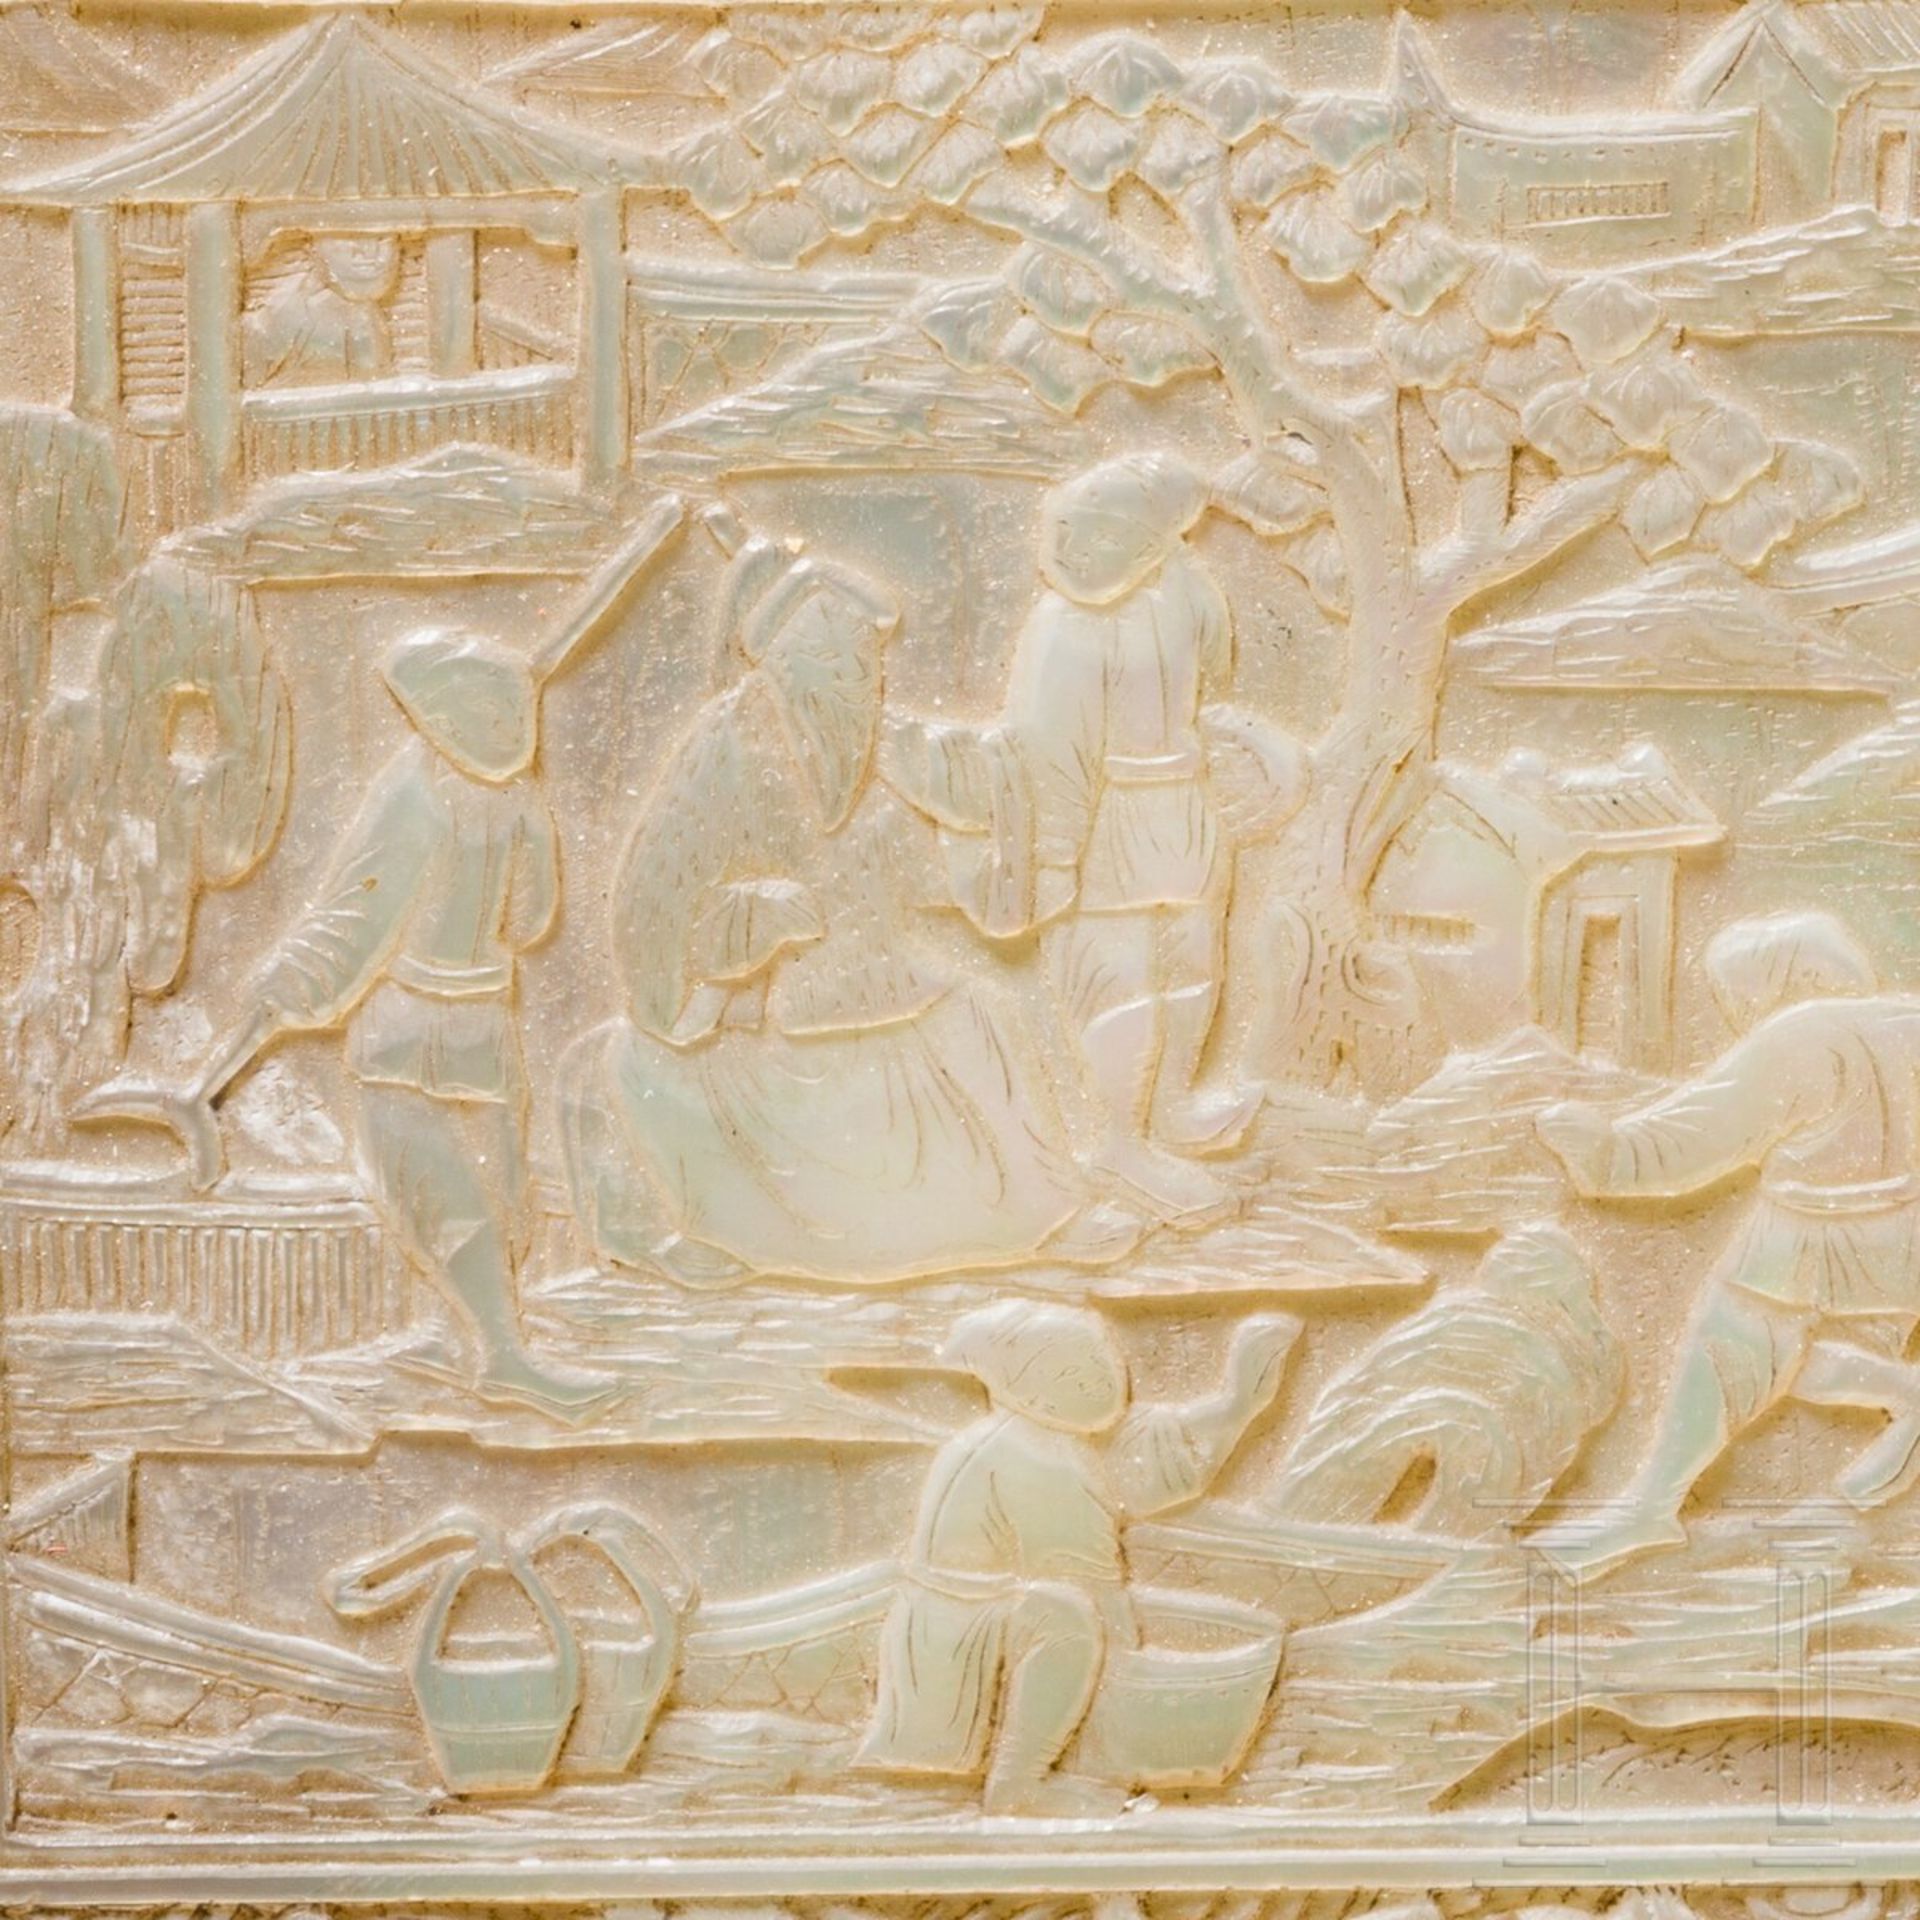 Fein geschnitzte Perlmutt-Tabatiere, chinesische Exportarbeit, um 1800 - Image 6 of 6